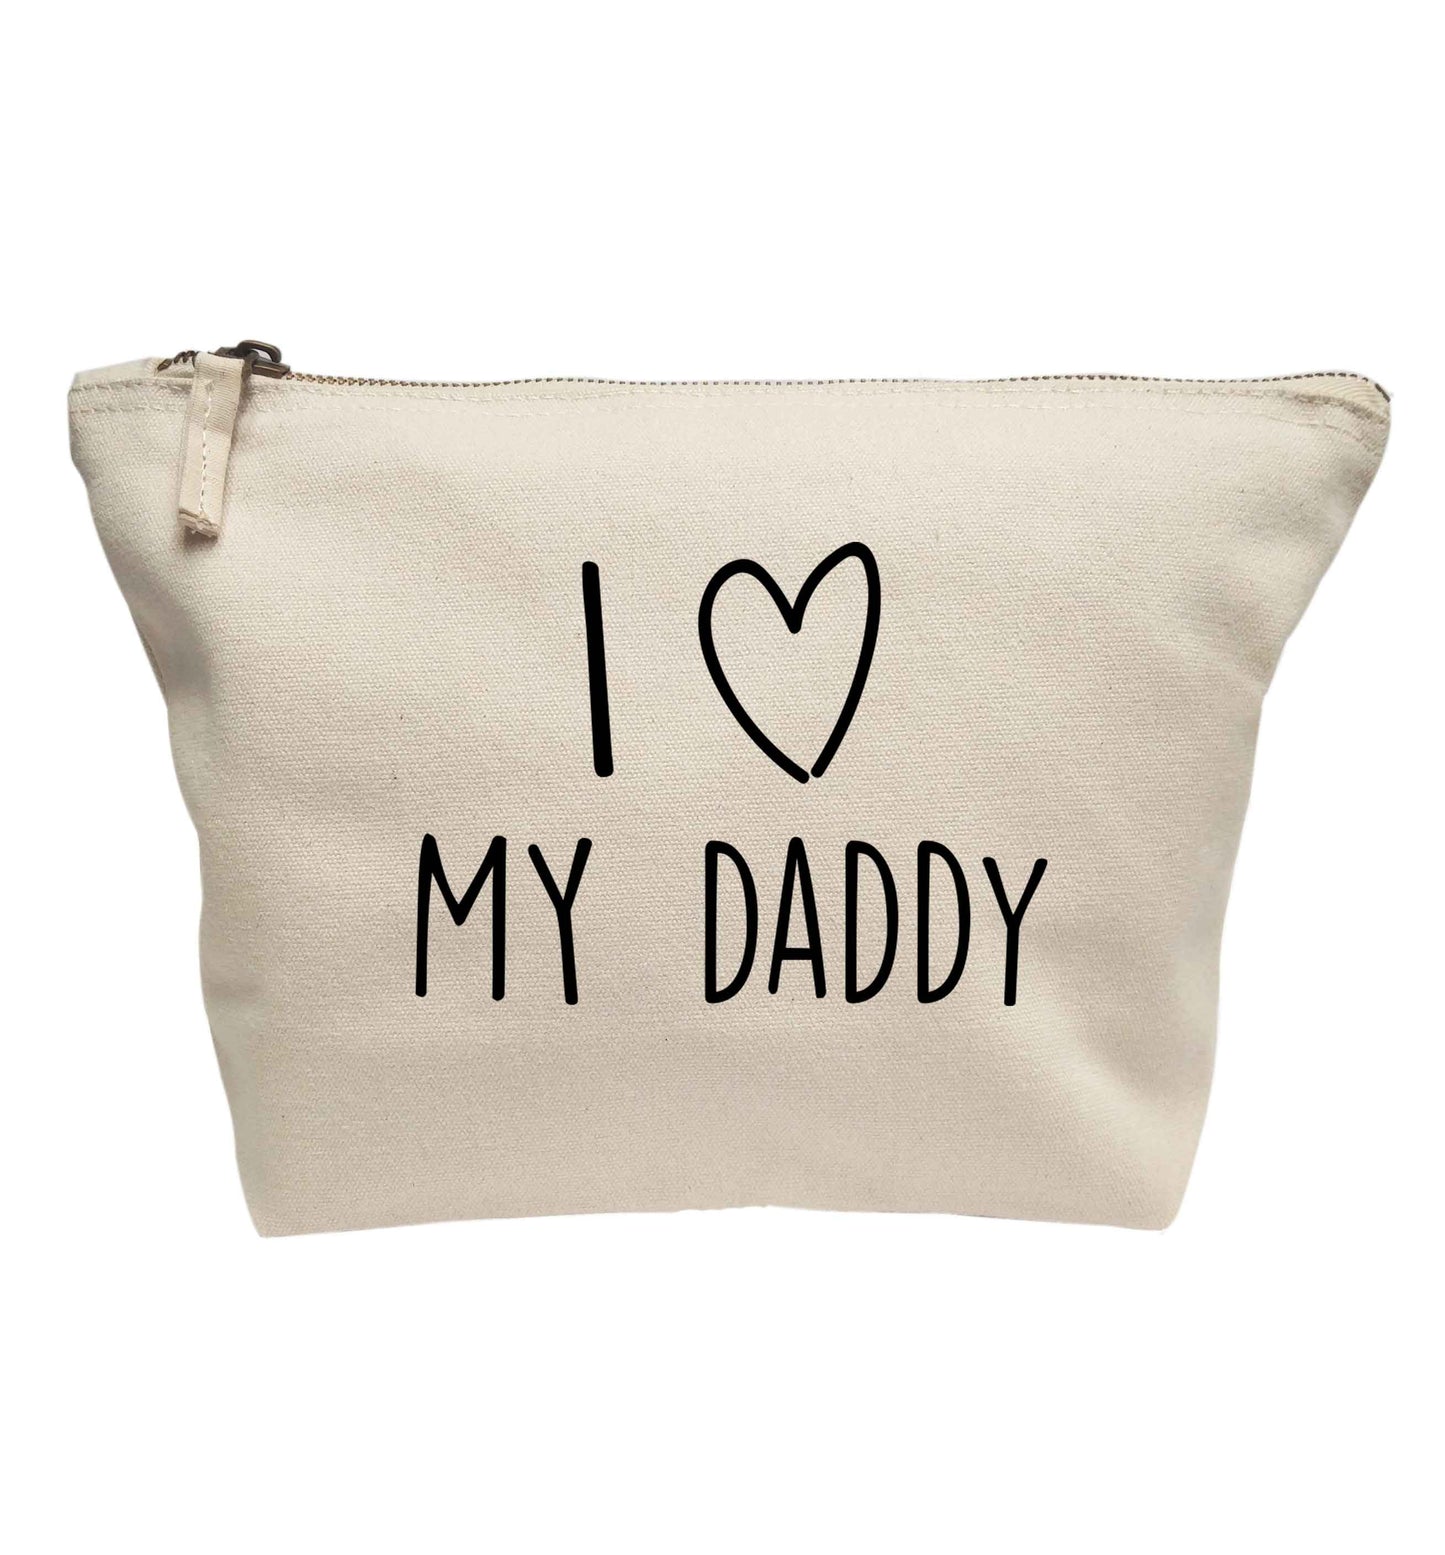 I love my daddy | Makeup / wash bag